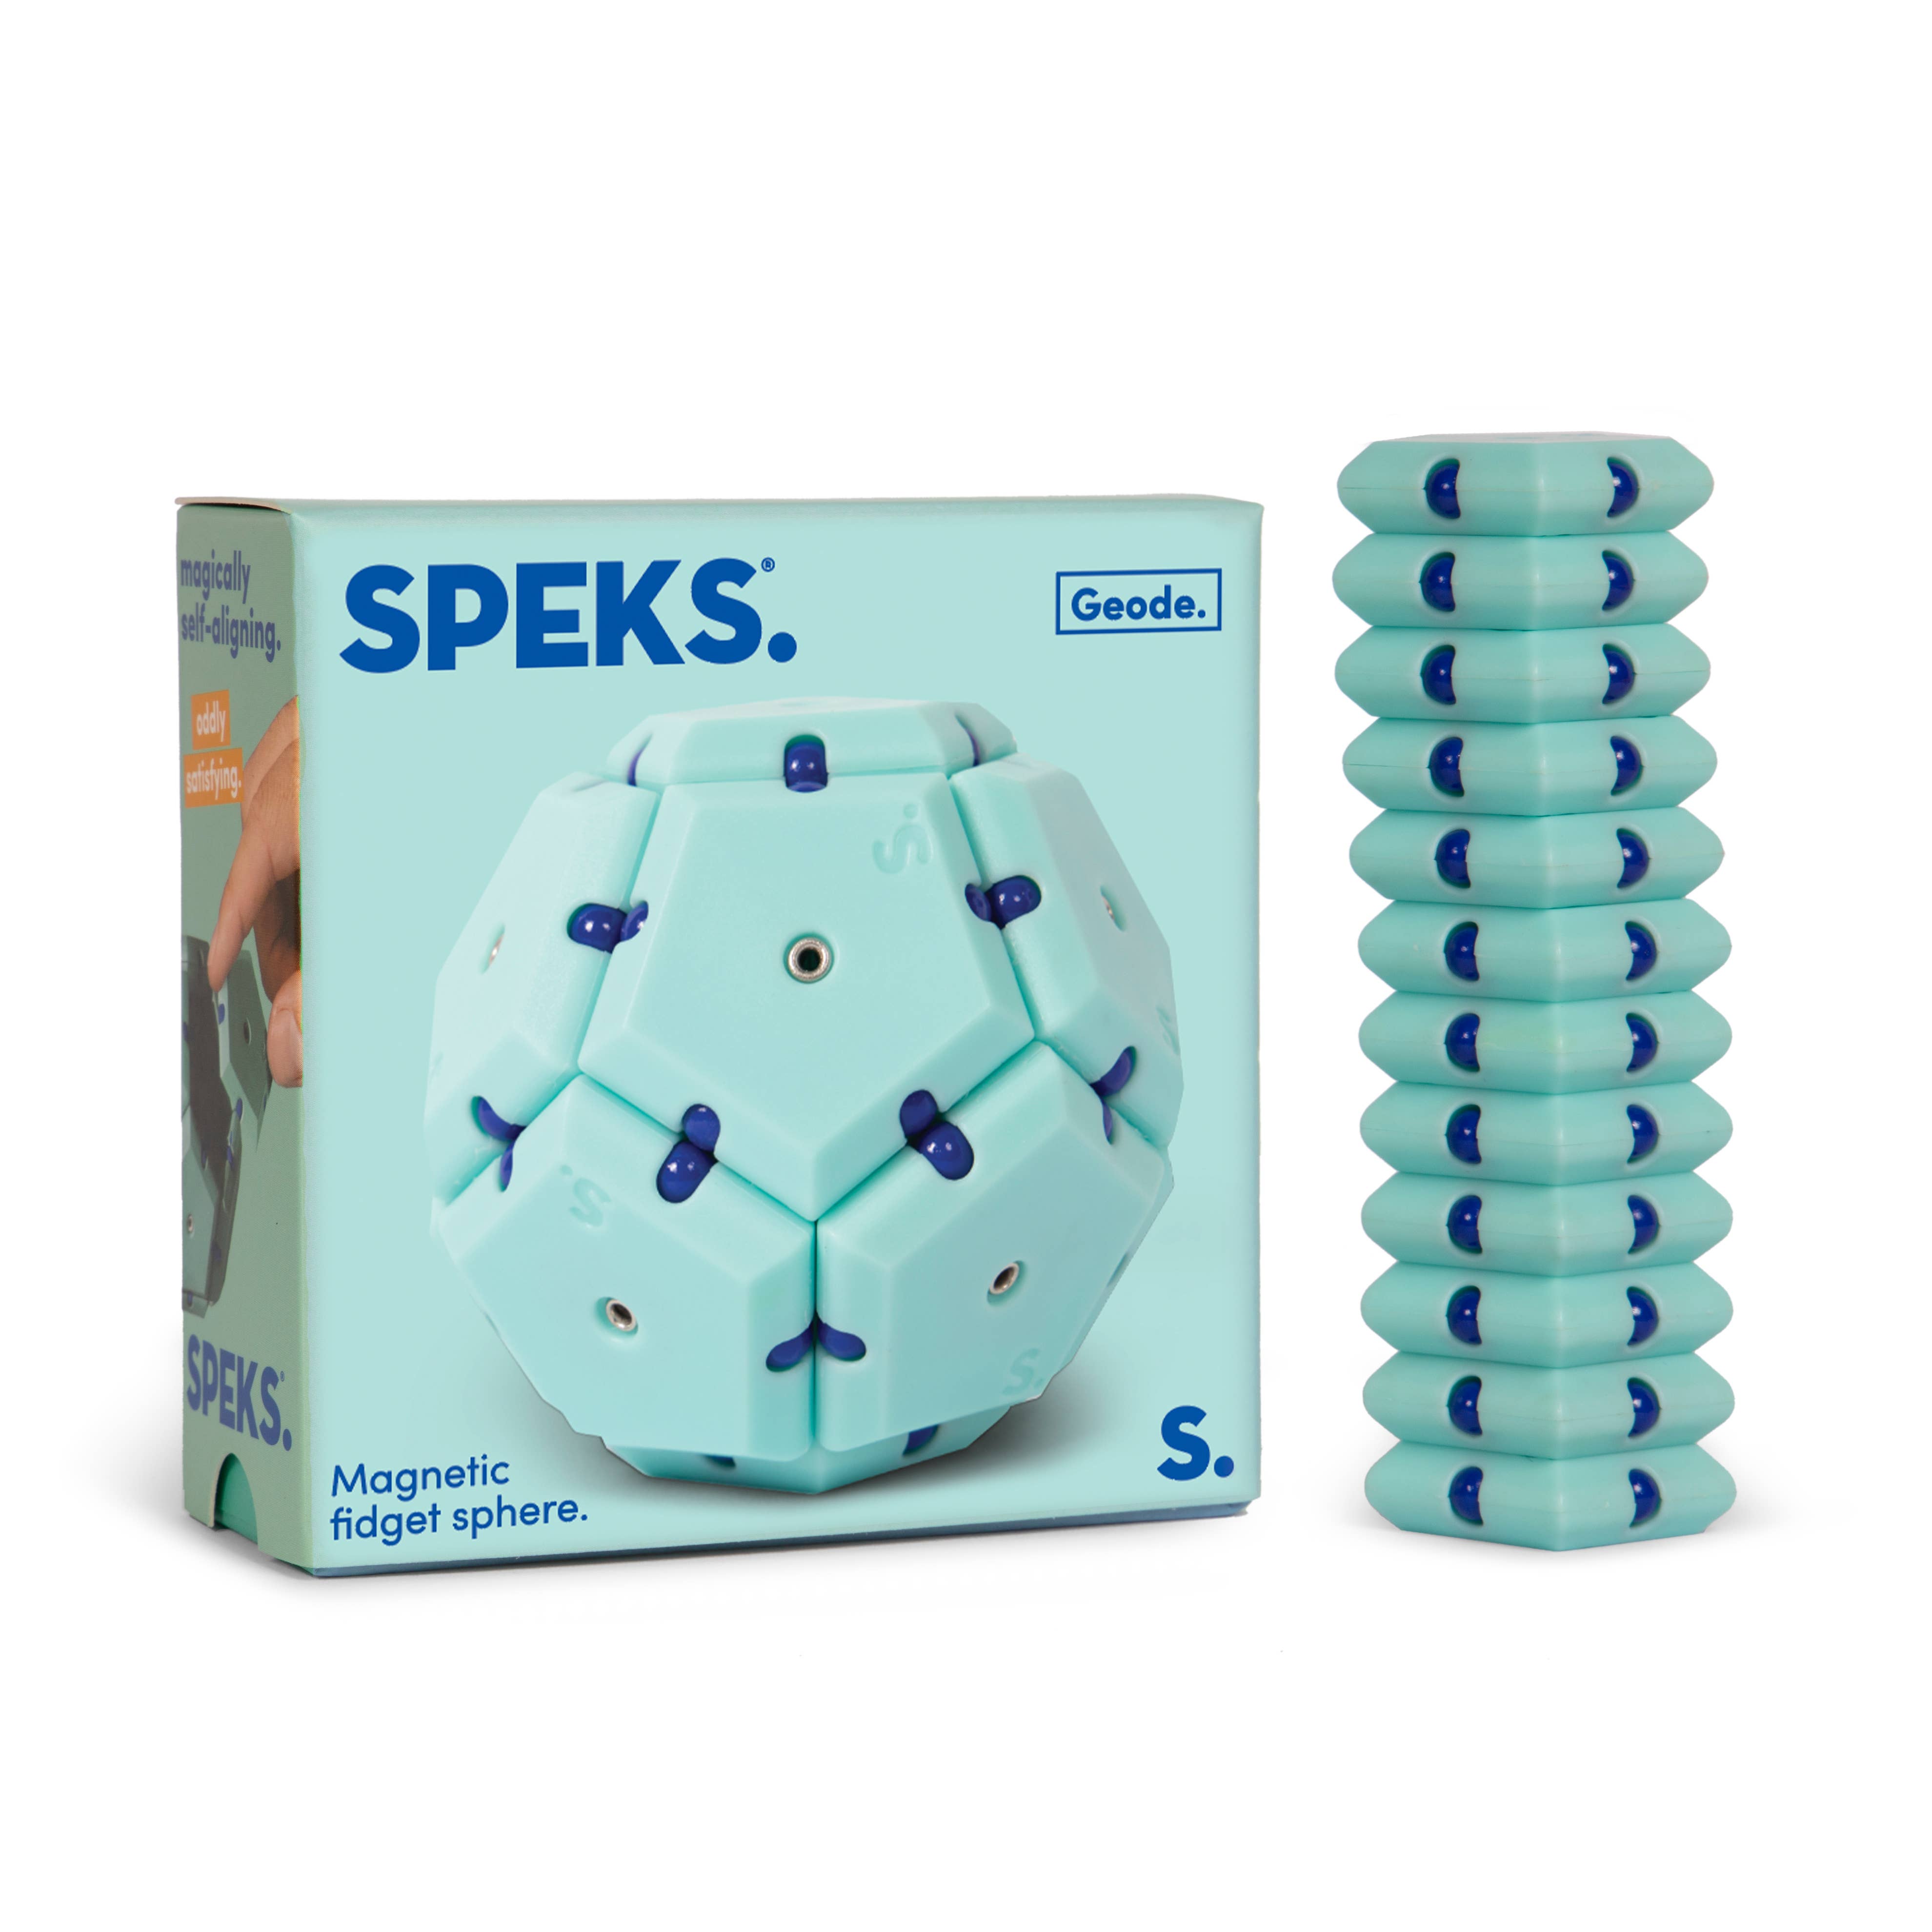 Speks Geode Pop Magnetic Fidget Sphere